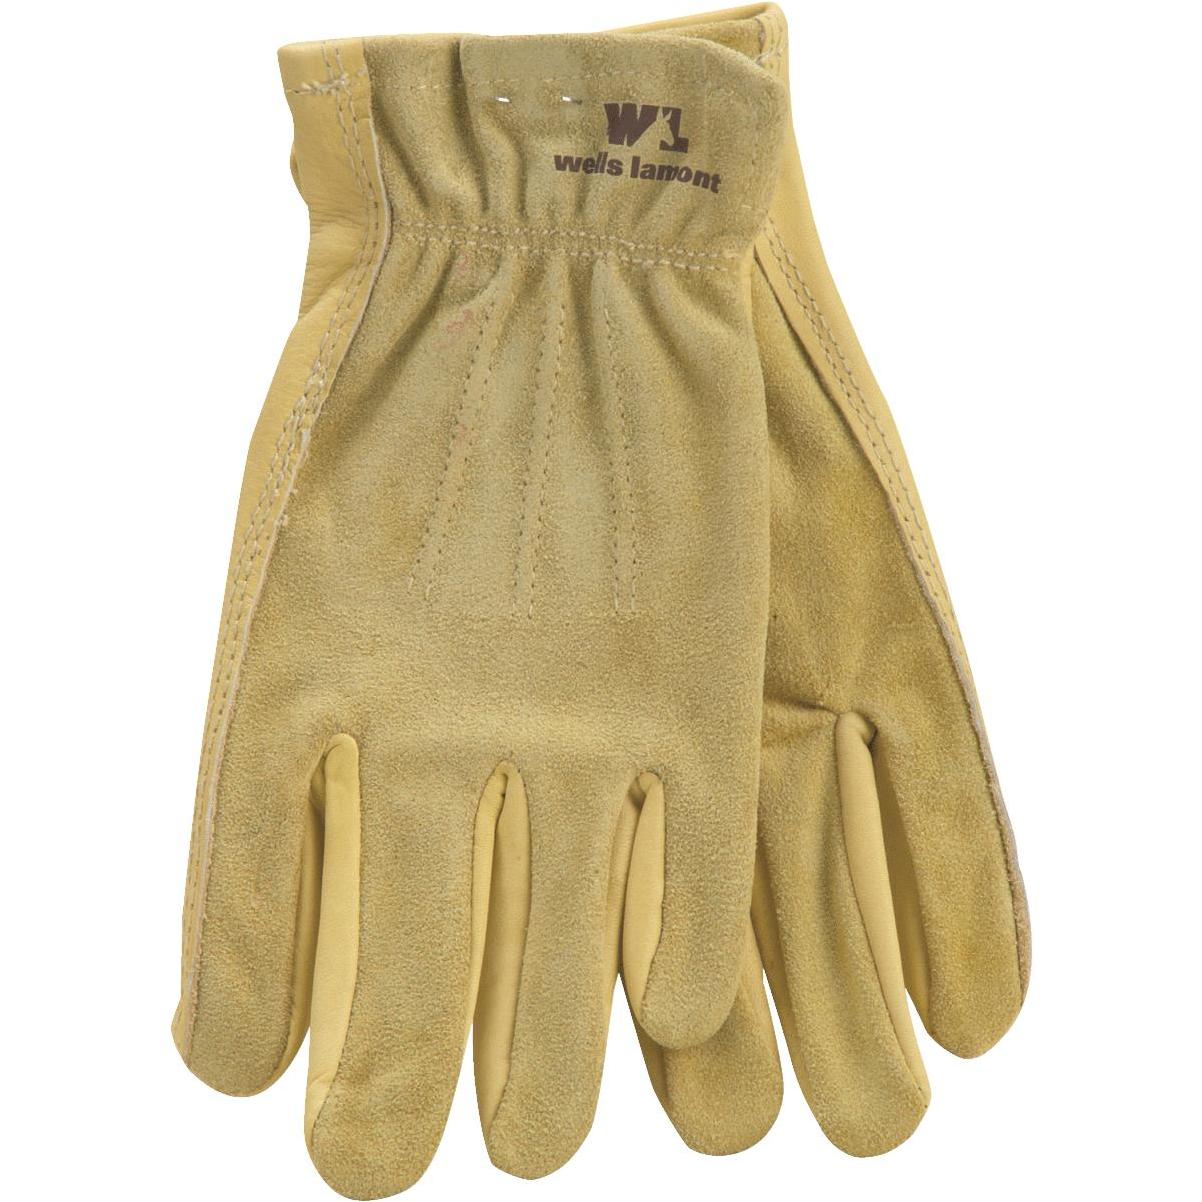 Wells Lamont Women's Small Grain Cowhide Leather Work Glove 